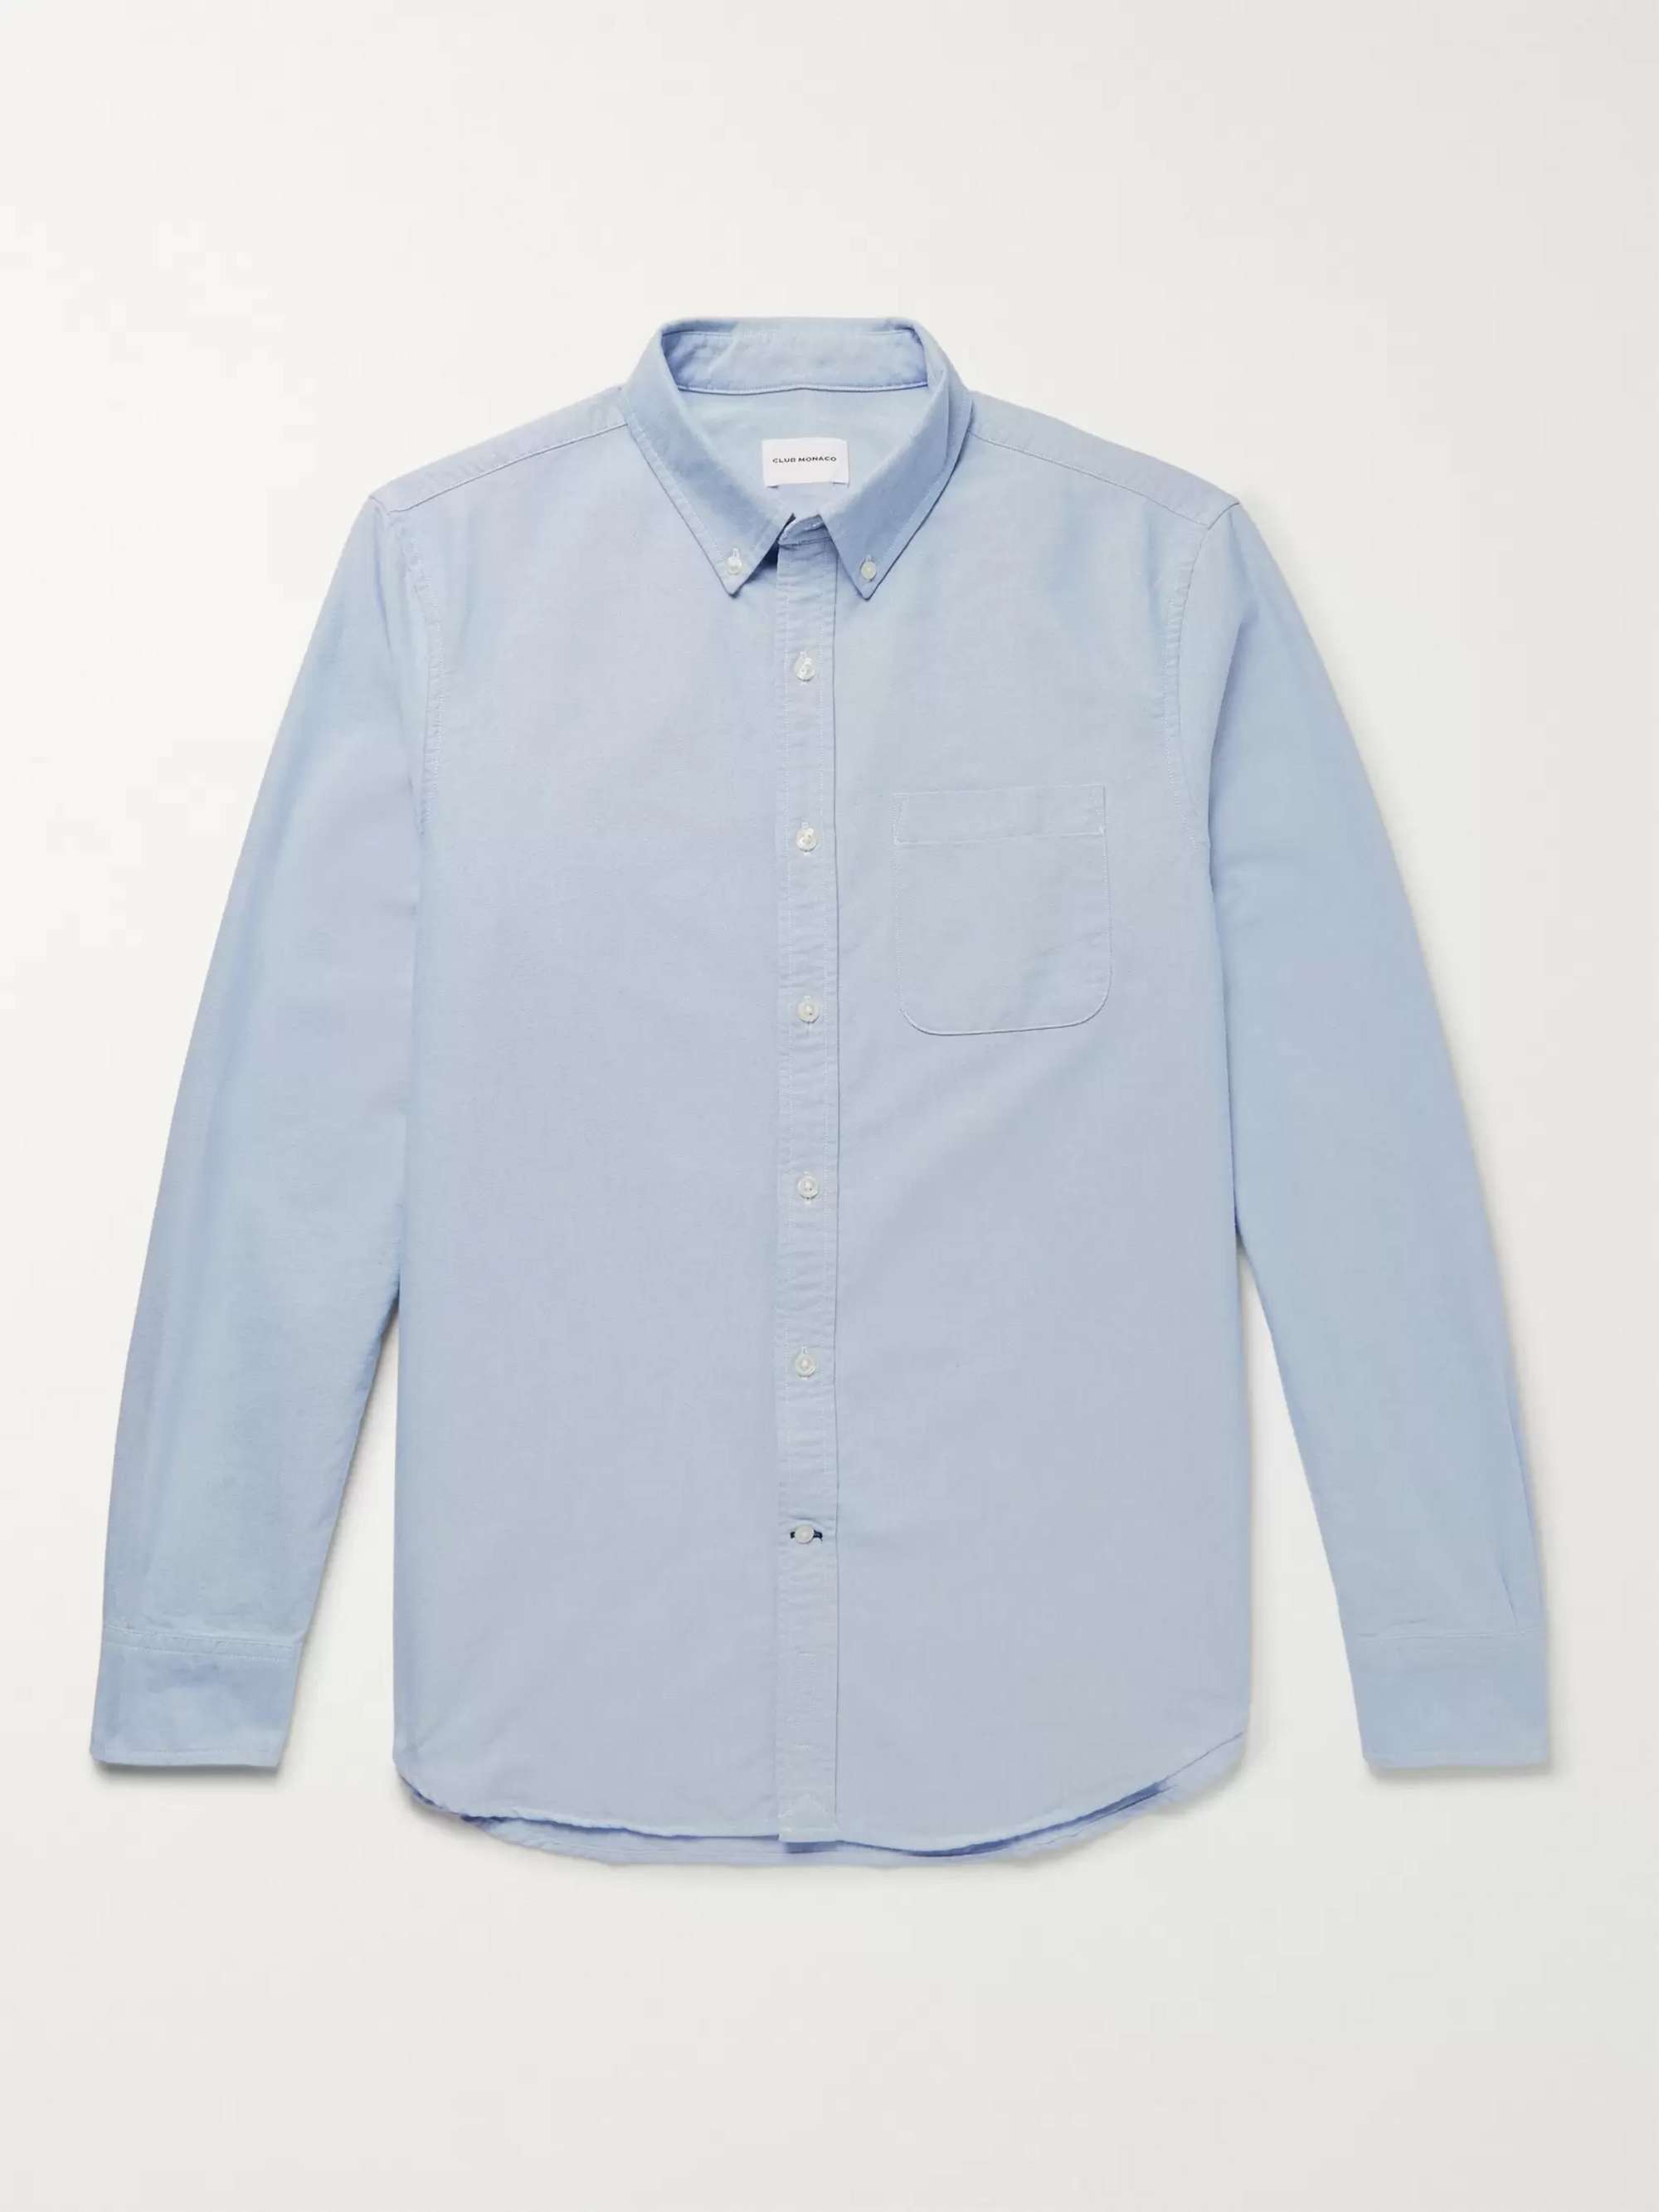 CLUB MONACO Button-Down Collar Cotton Oxford Shirt